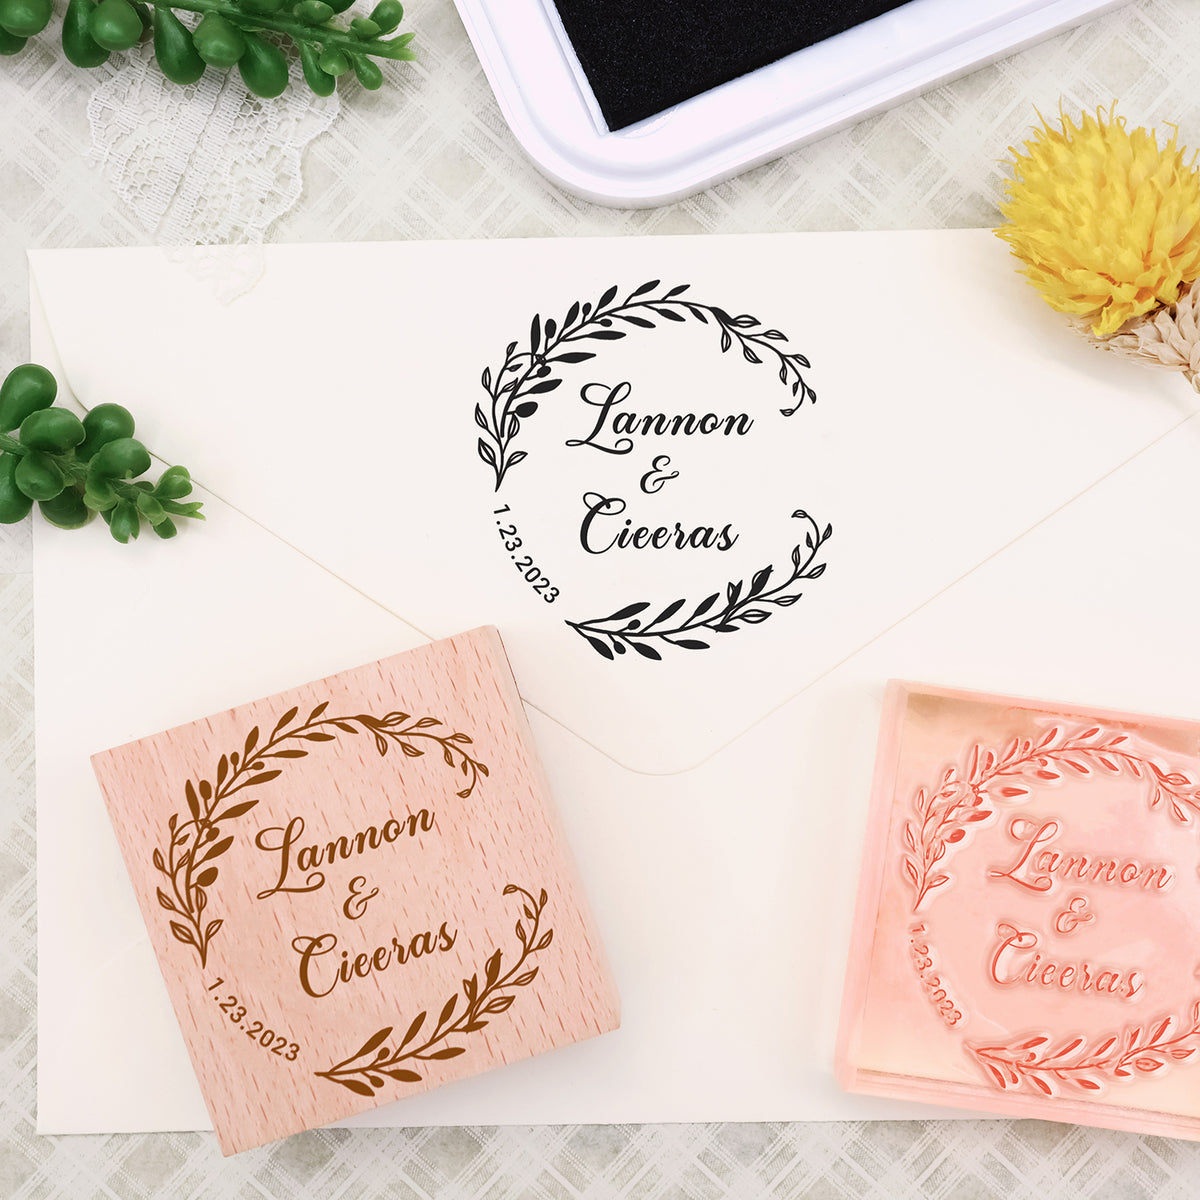 Luxury Handmade Wax Seal for Valentines Day - Amy Sadler Designs